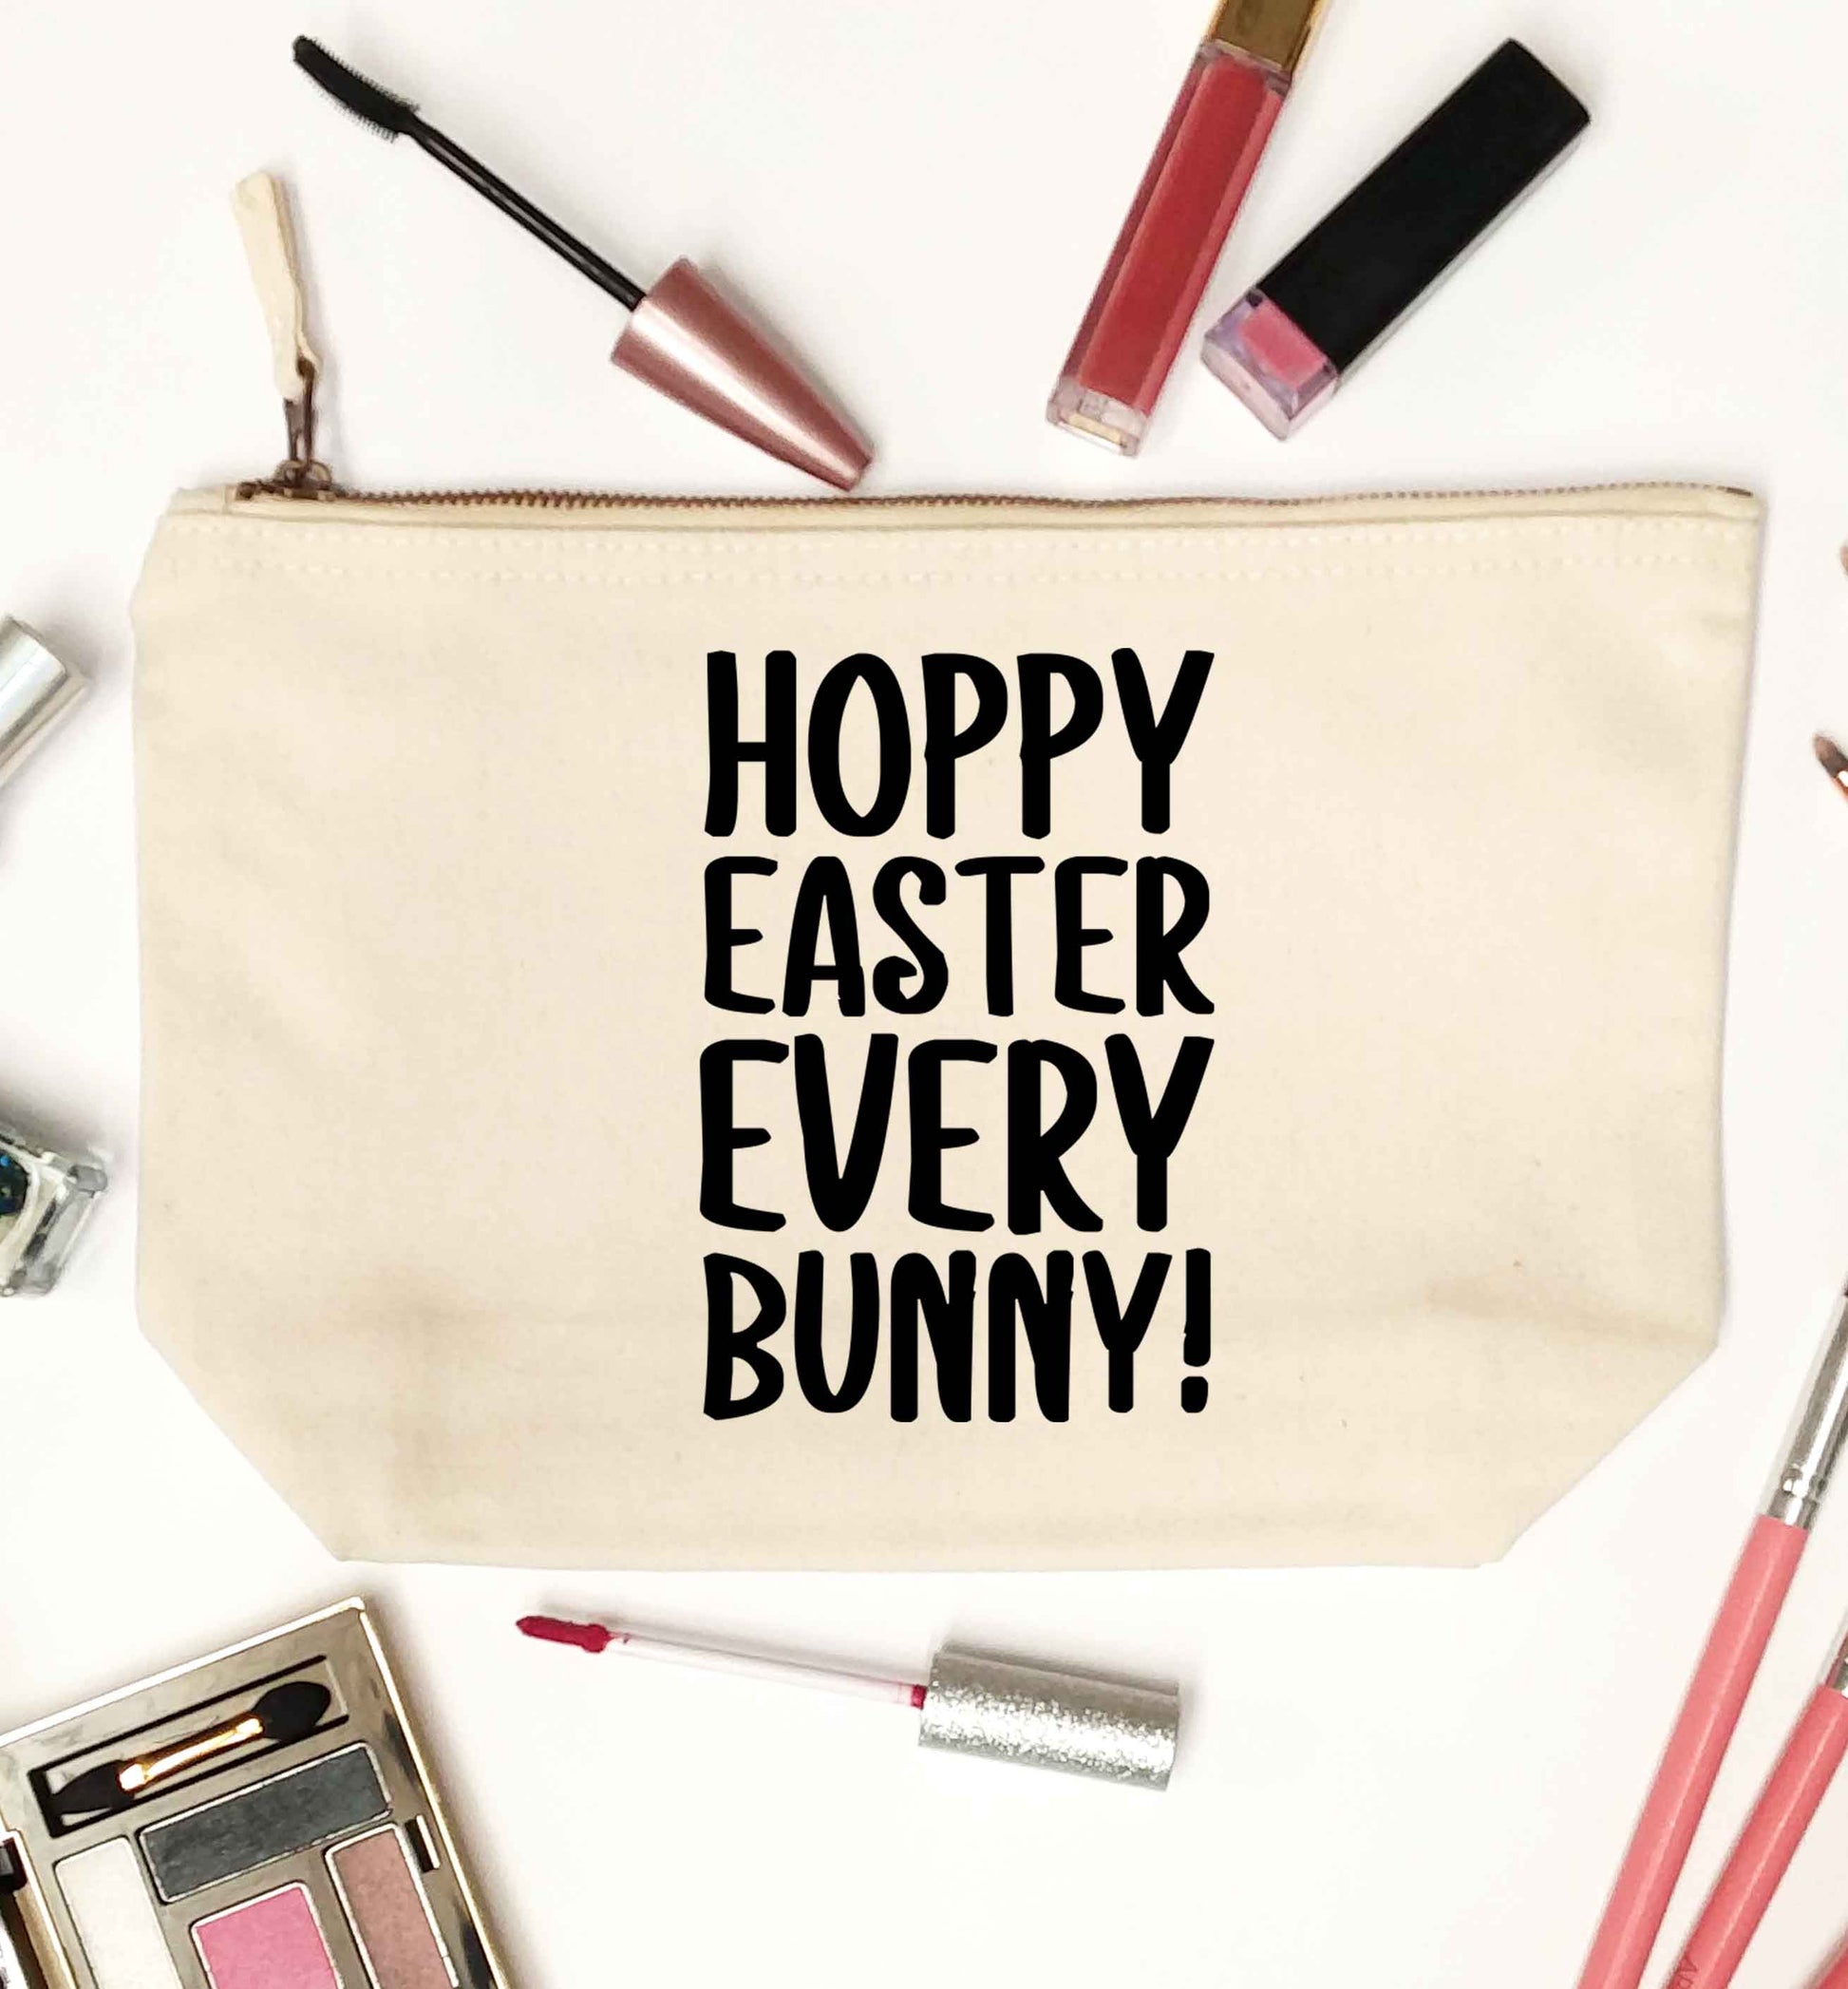 Hoppy Easter every bunny! natural makeup bag